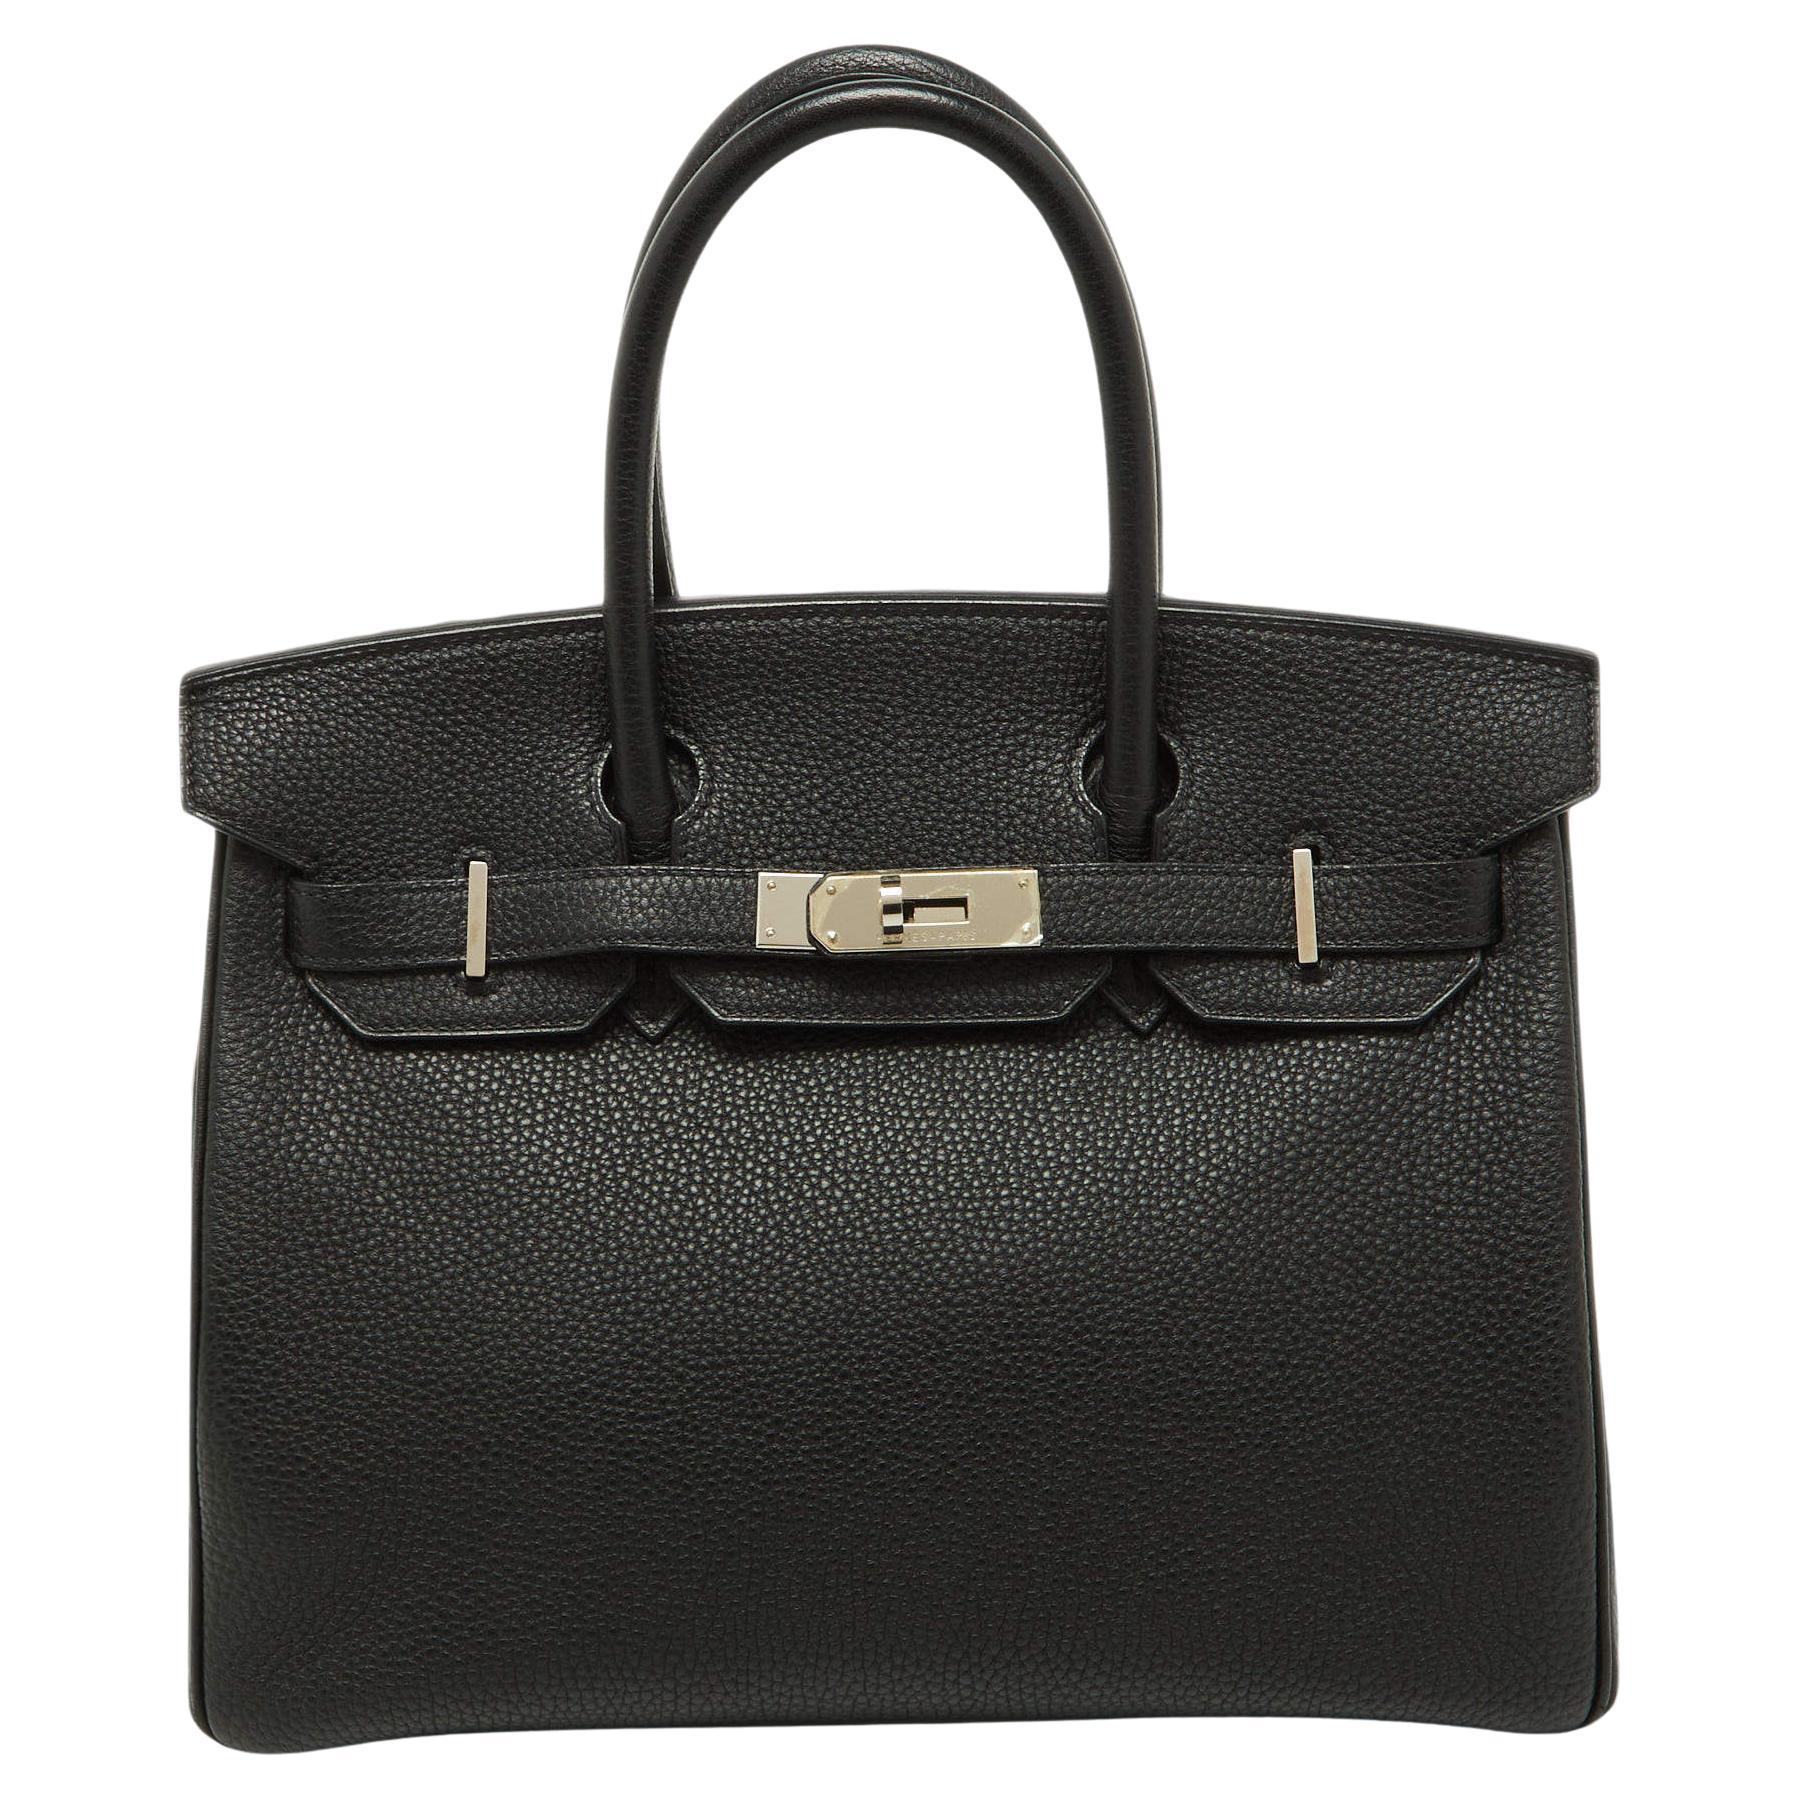 Hermes Black Togo Leather Palladium Finish Birkin 30 Bag